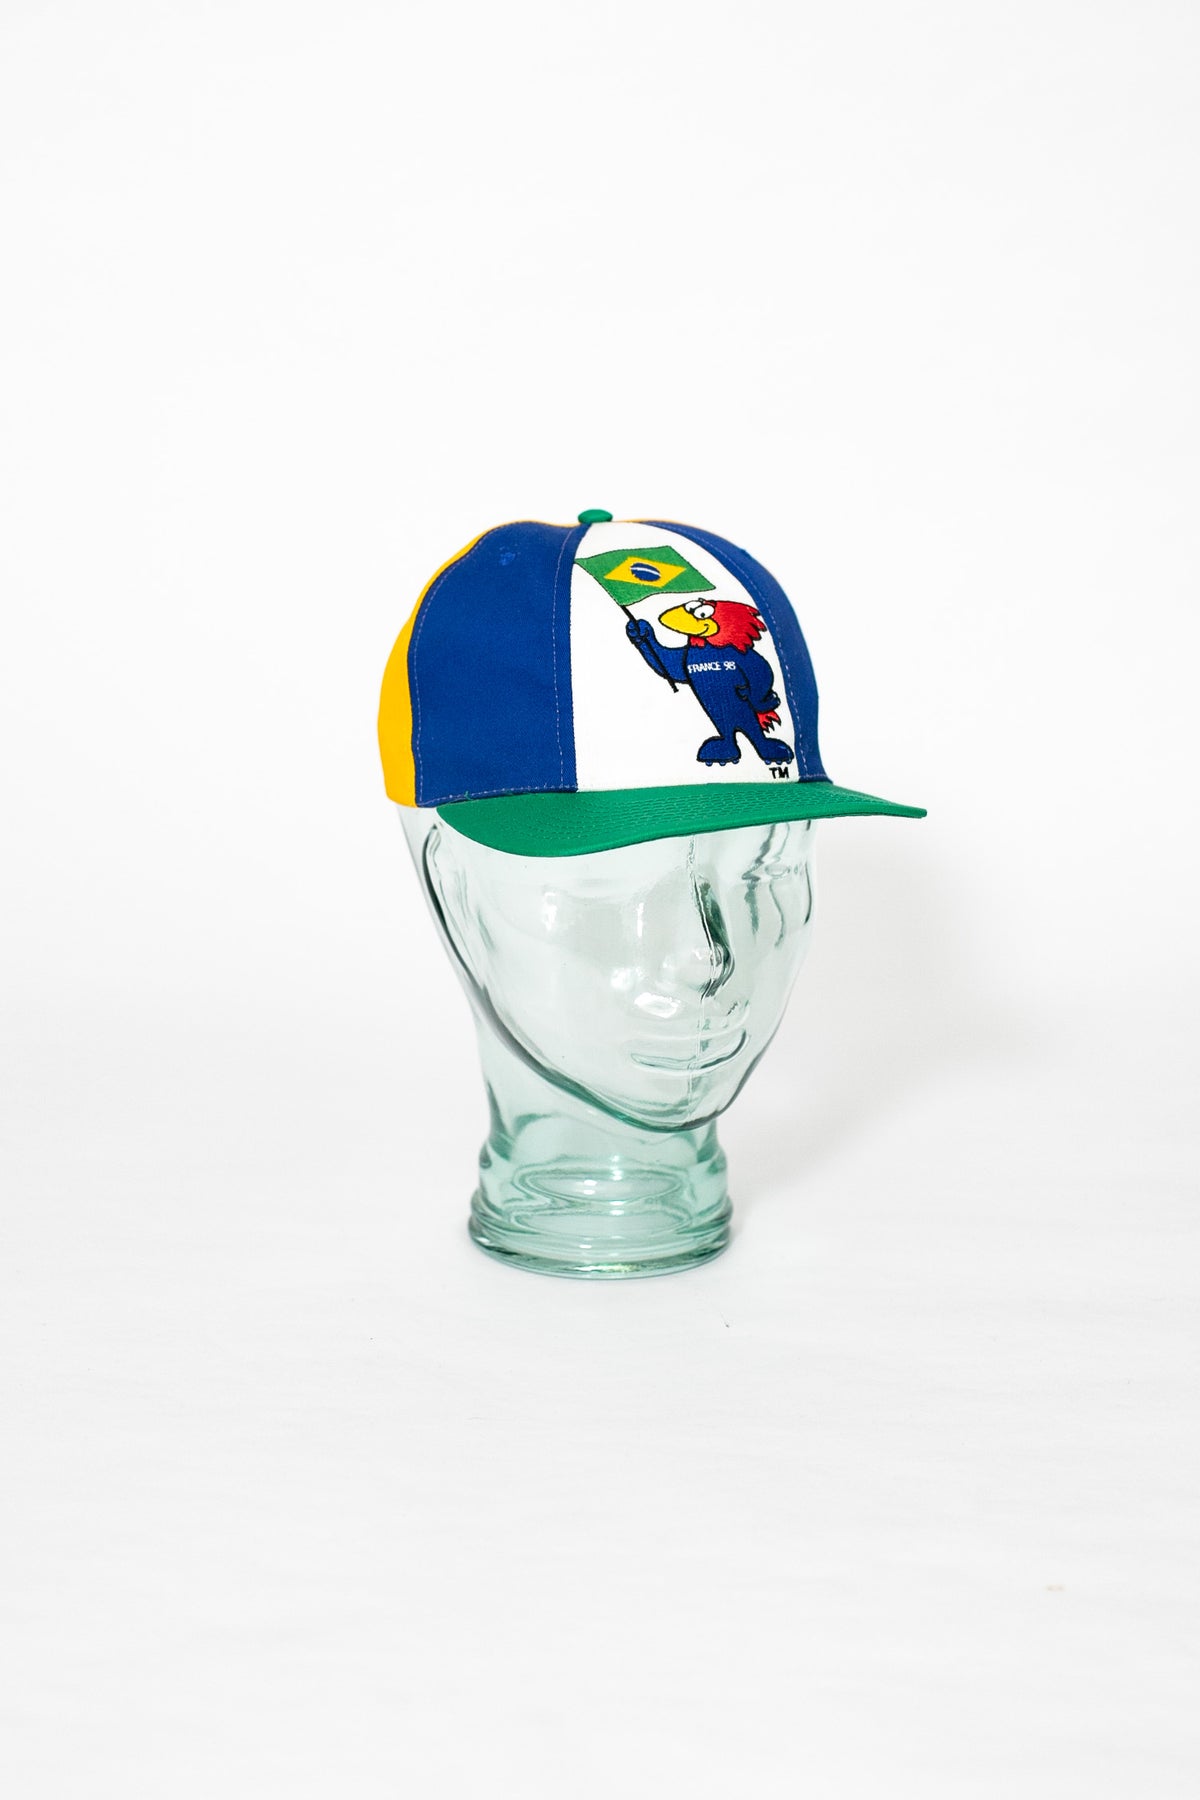 France 90 World Cup Cap